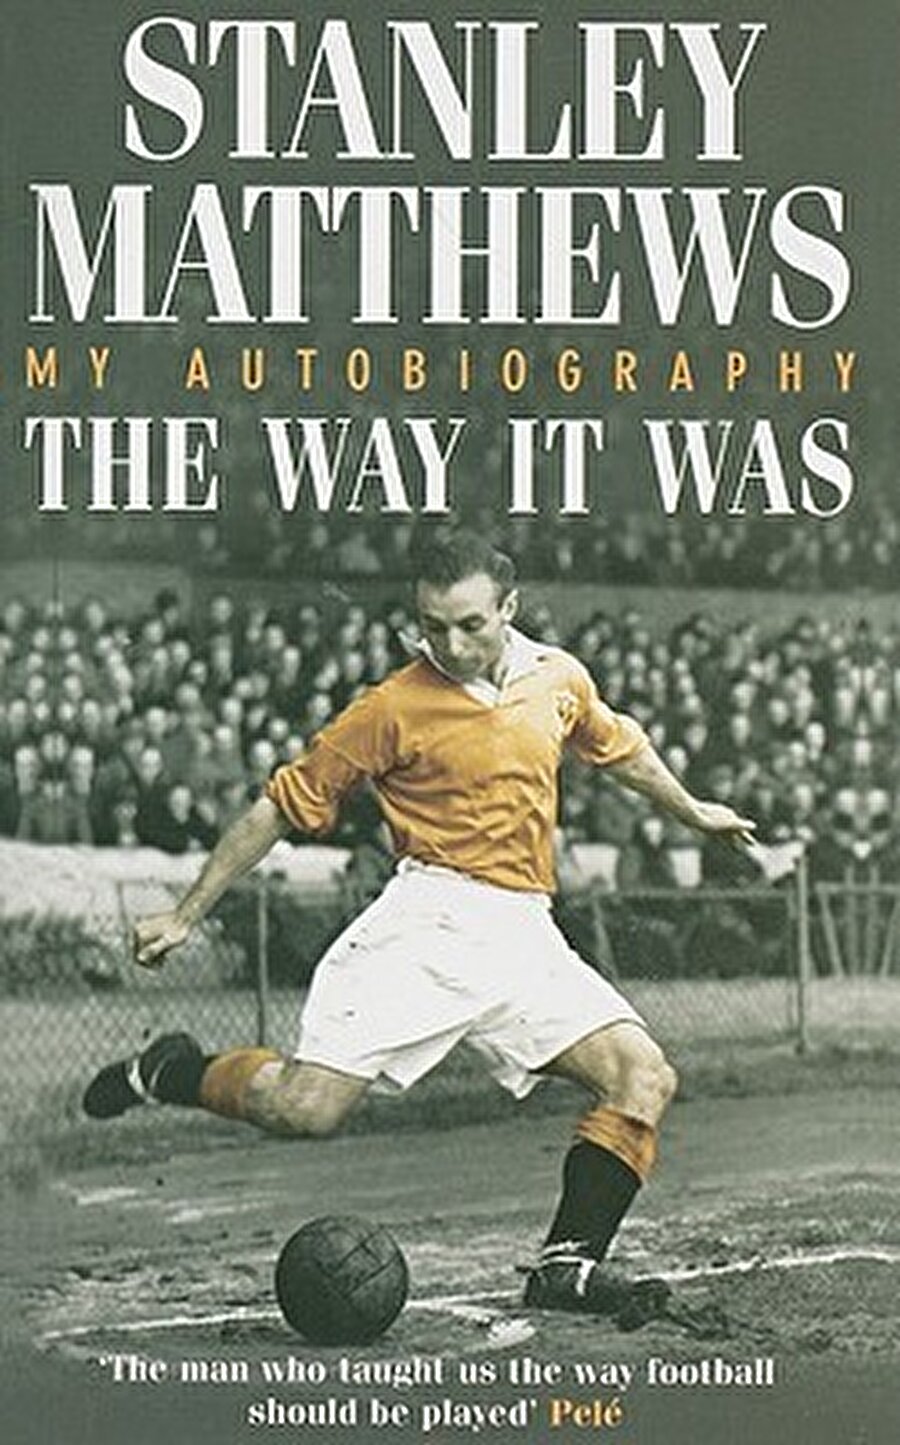 The Way it was

                                    Ünlü İngiliz futbolcu Stanley Matthews'in otobiyografisi. 
                                